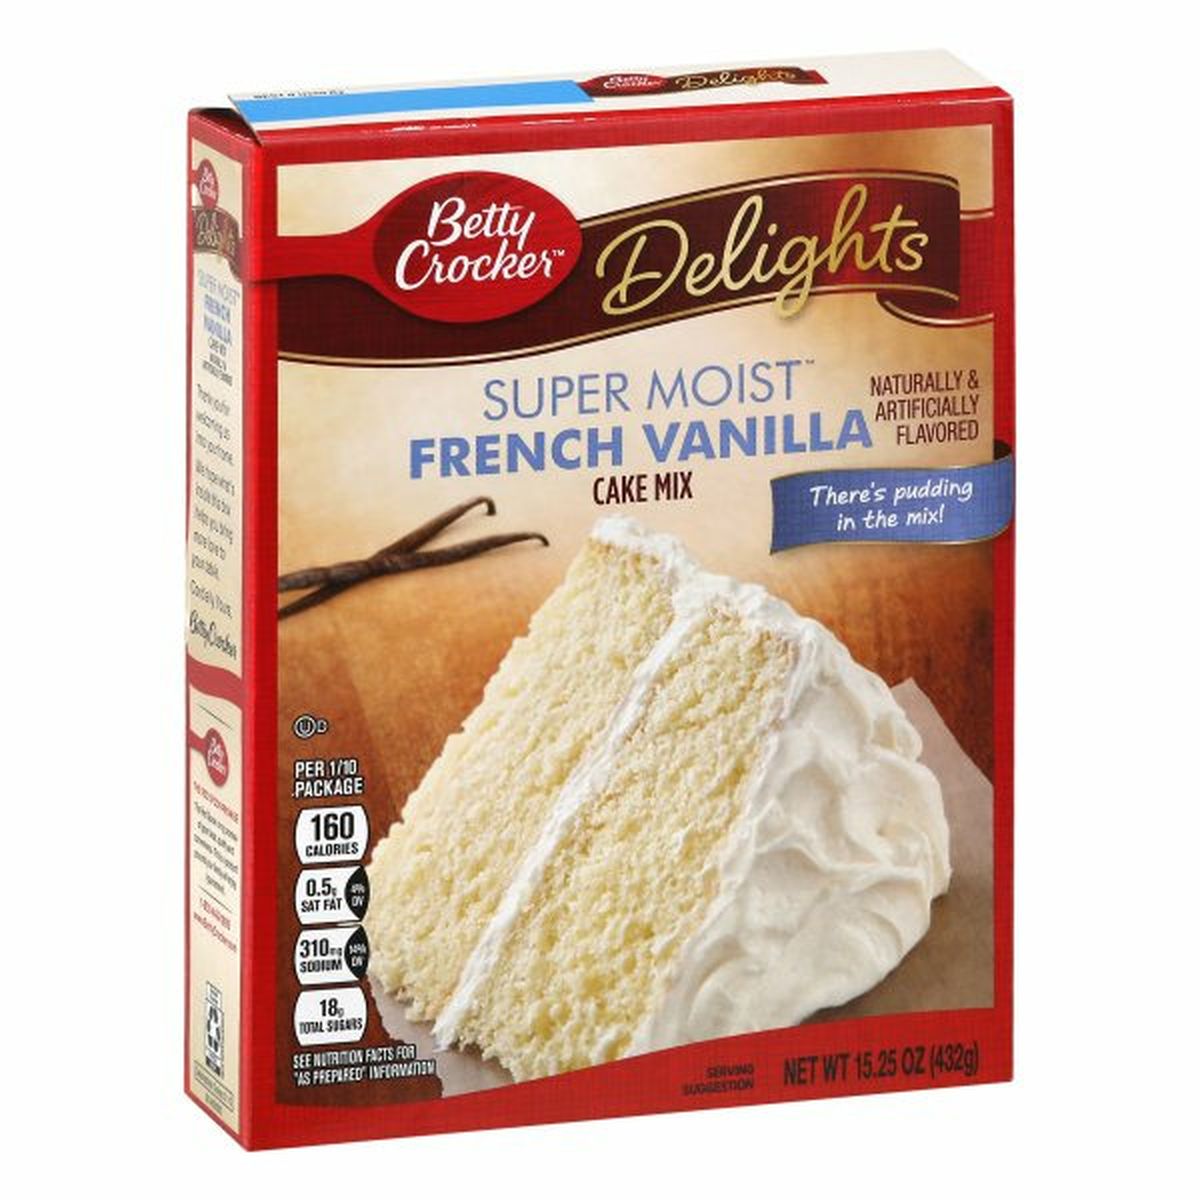 Calories in Betty Crocker Delights Cake Mix, French Vanilla, Super Moist